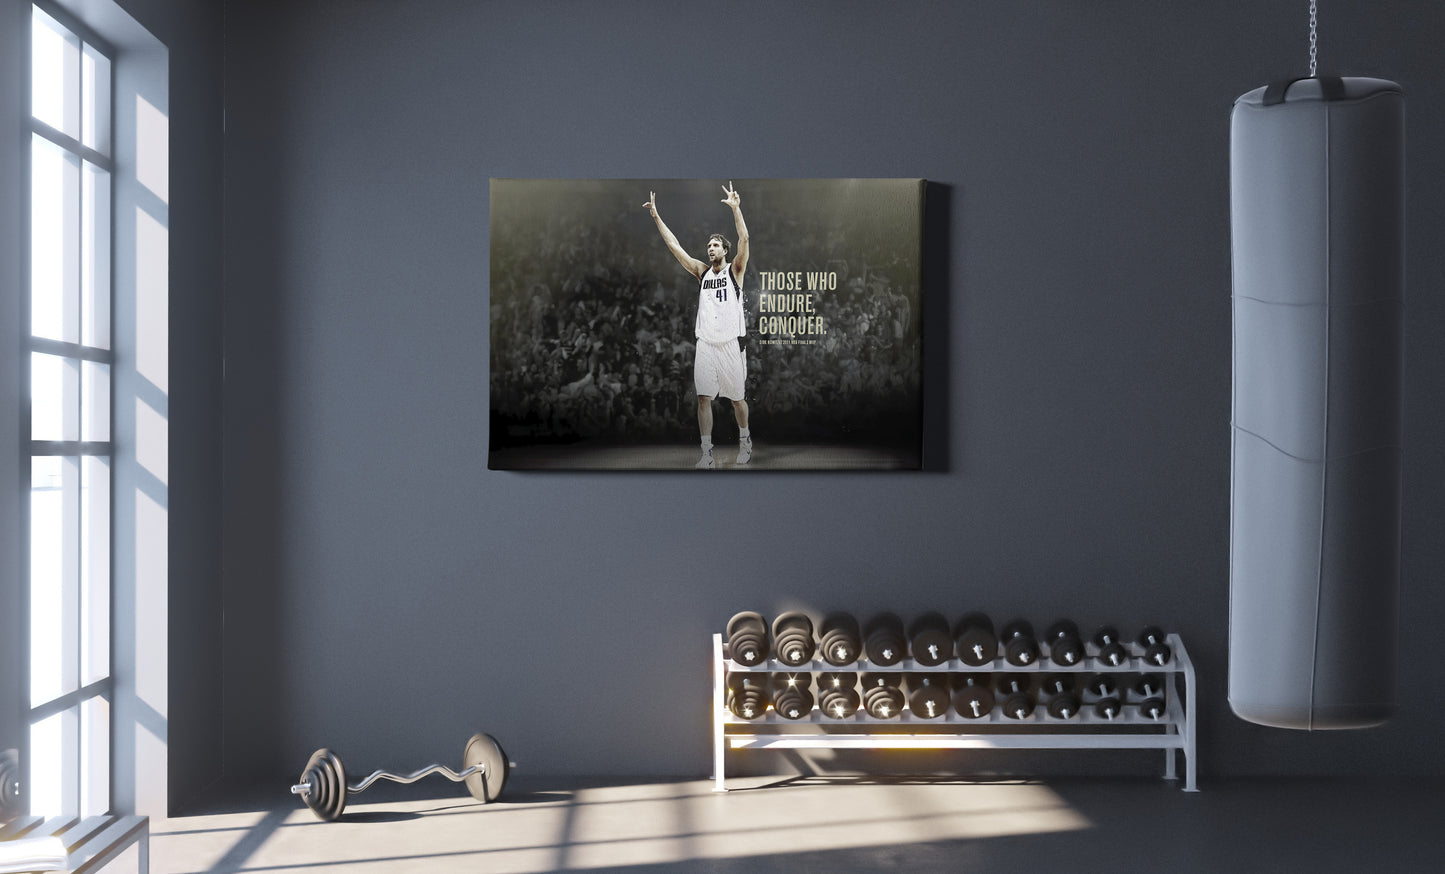 Dirk Nowitzki Poster Quotes Basketball Player Canvas Wall Art Home Decor Framed Art